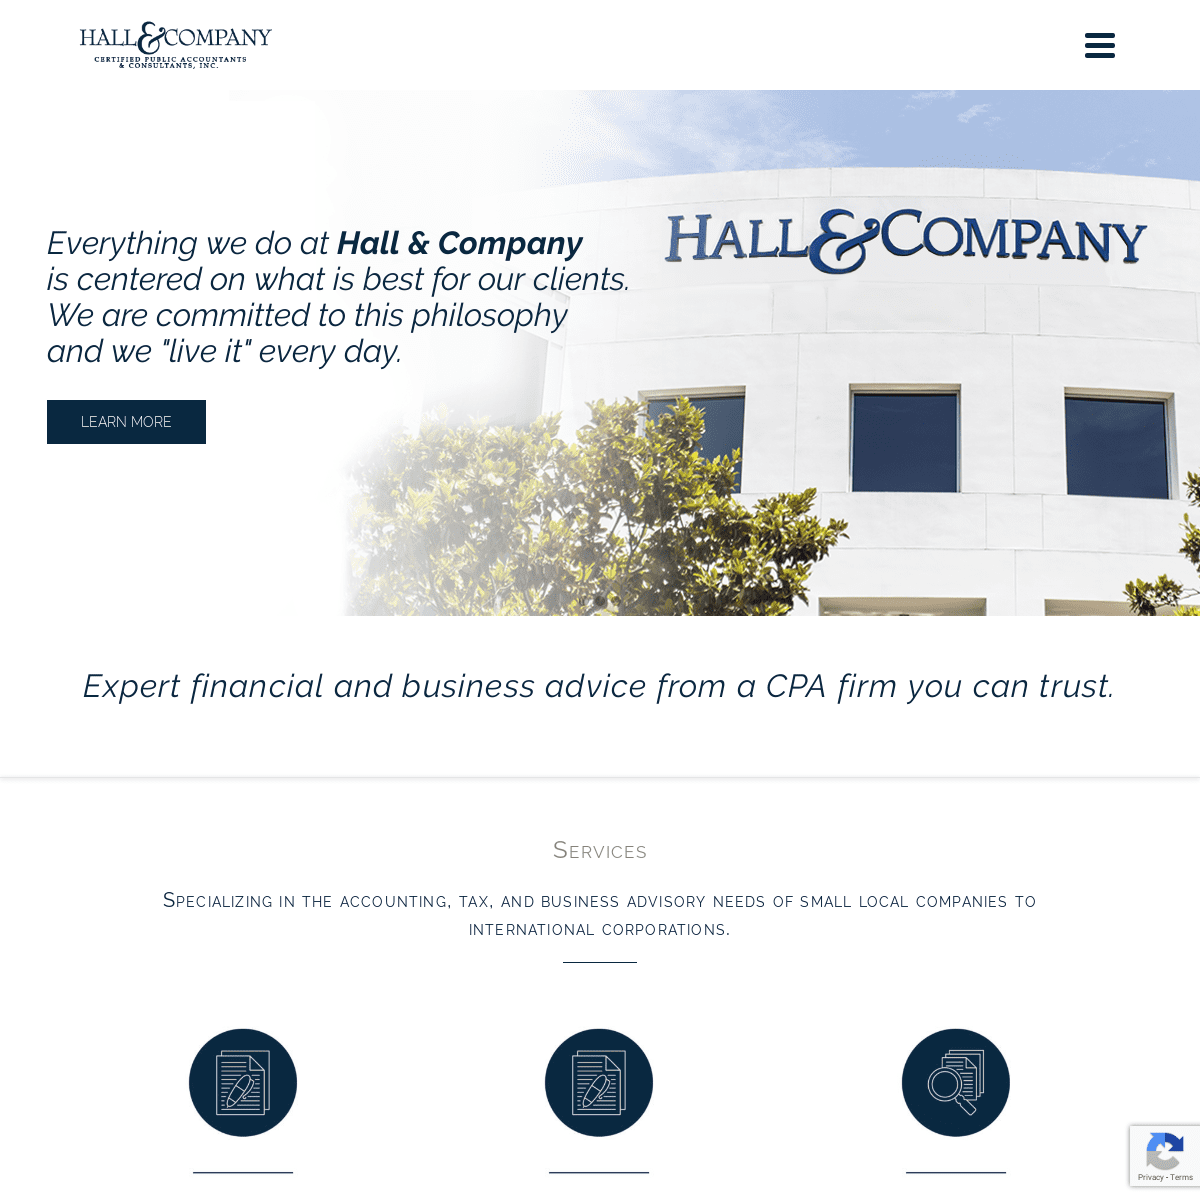 Hall & Company, Certified Public Accountants